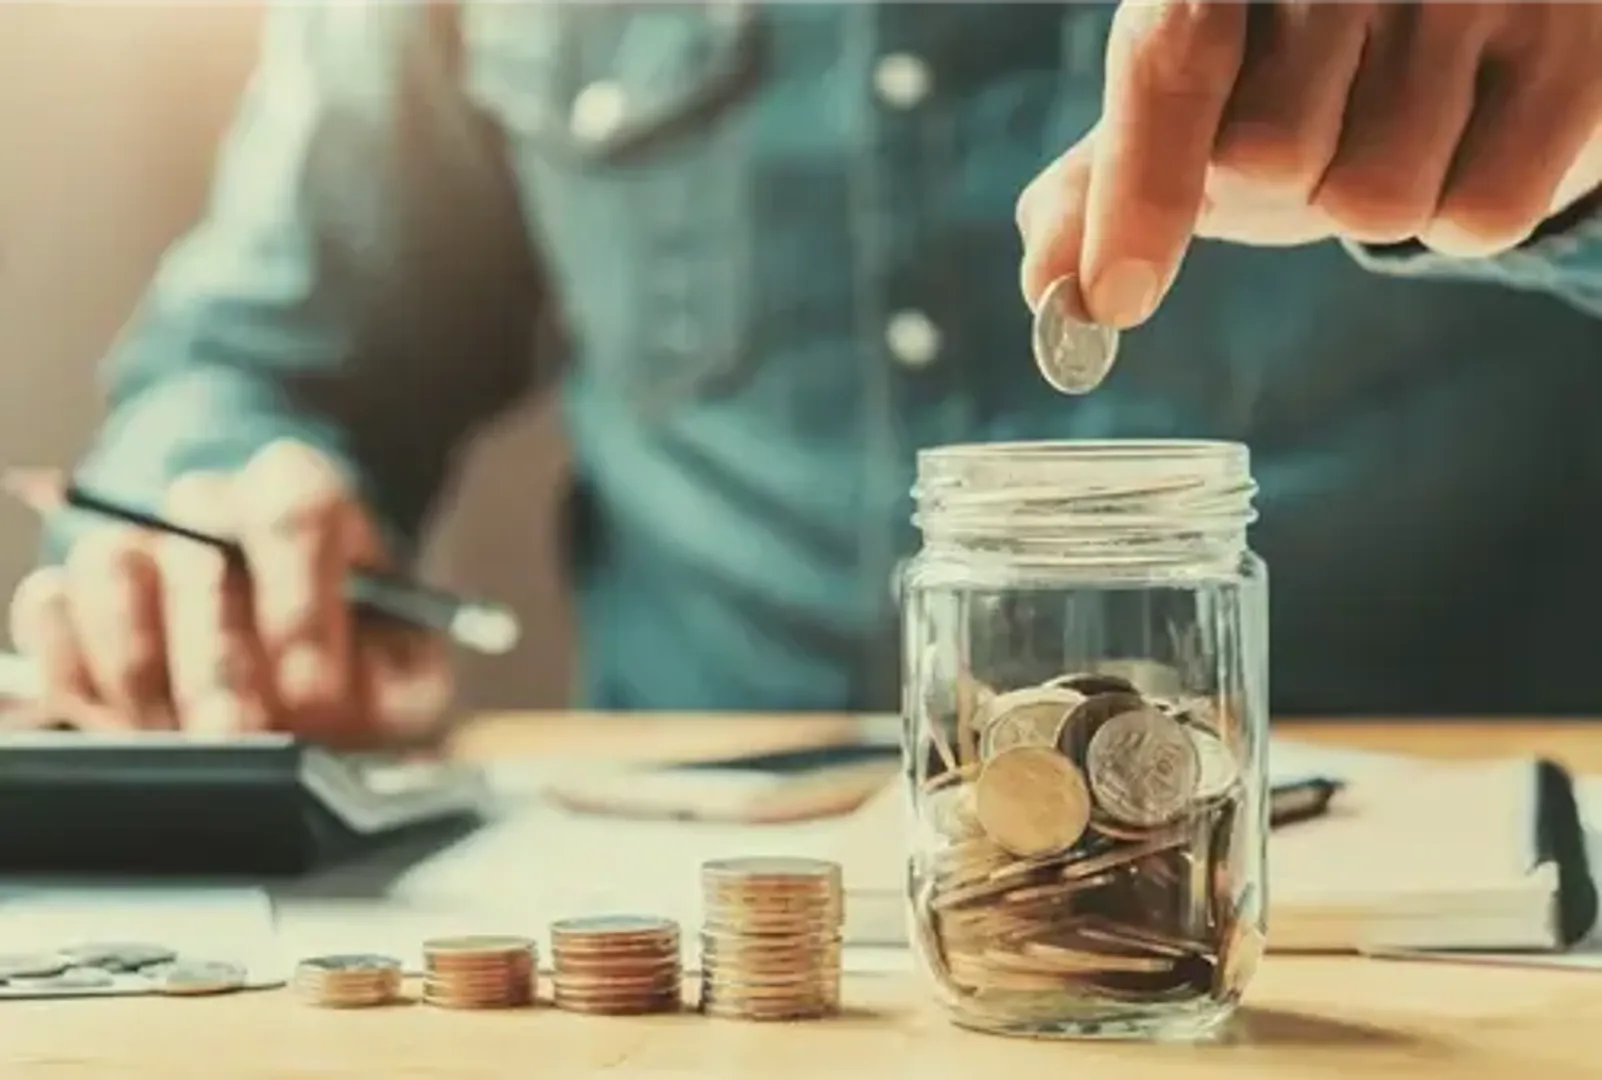 A man carefully placing coins into a jar on a desk.